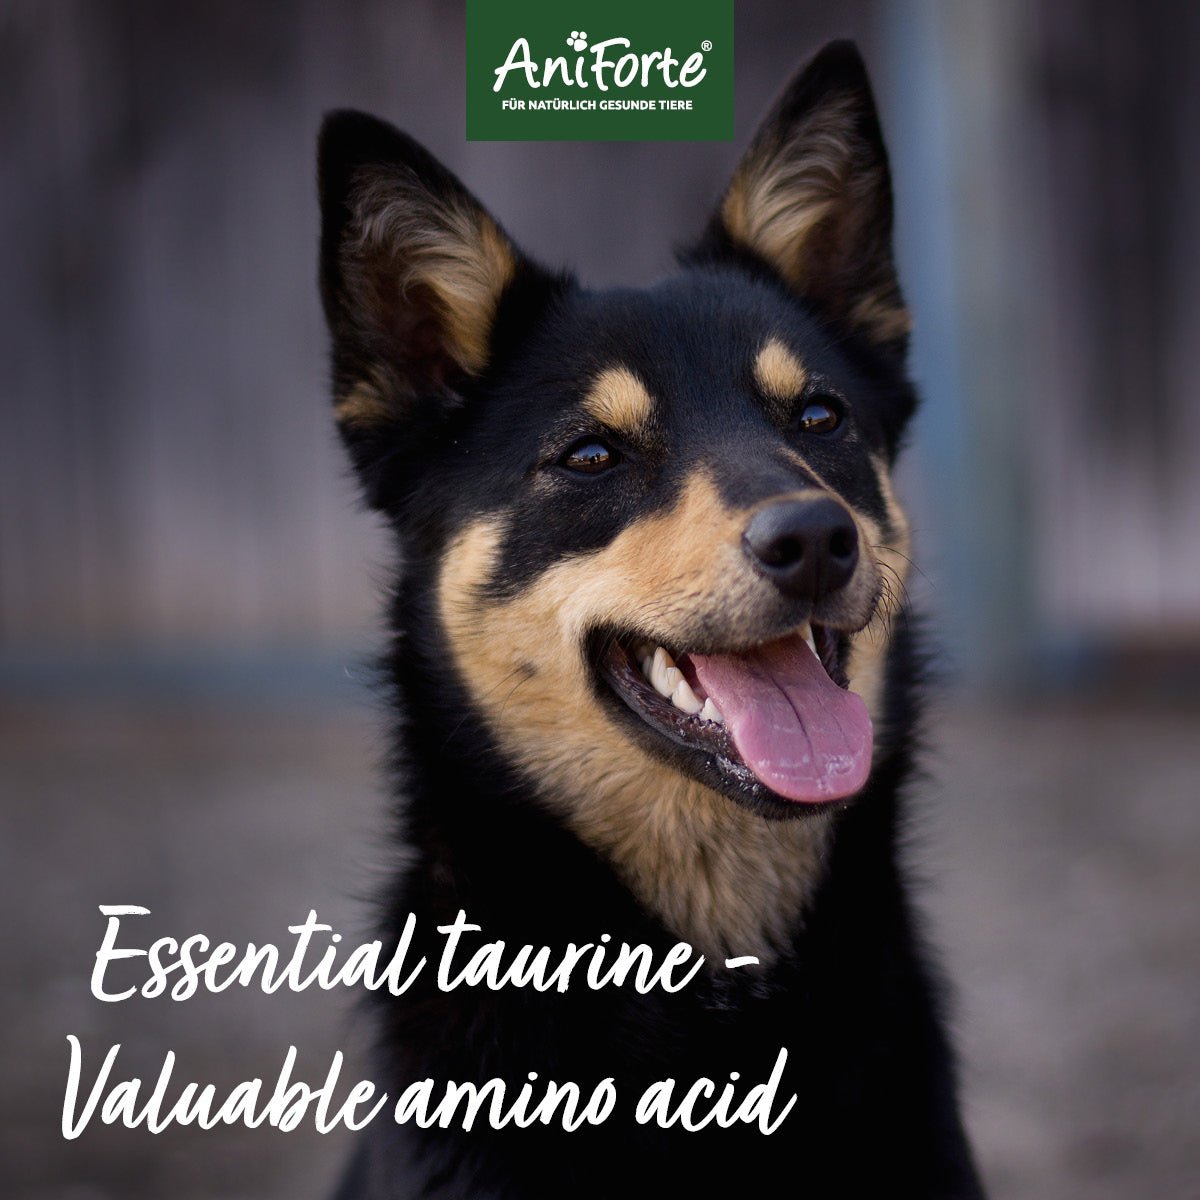 Taurine Powder for Dogs - 100g - Amino Acid Supplement - AniForte UK